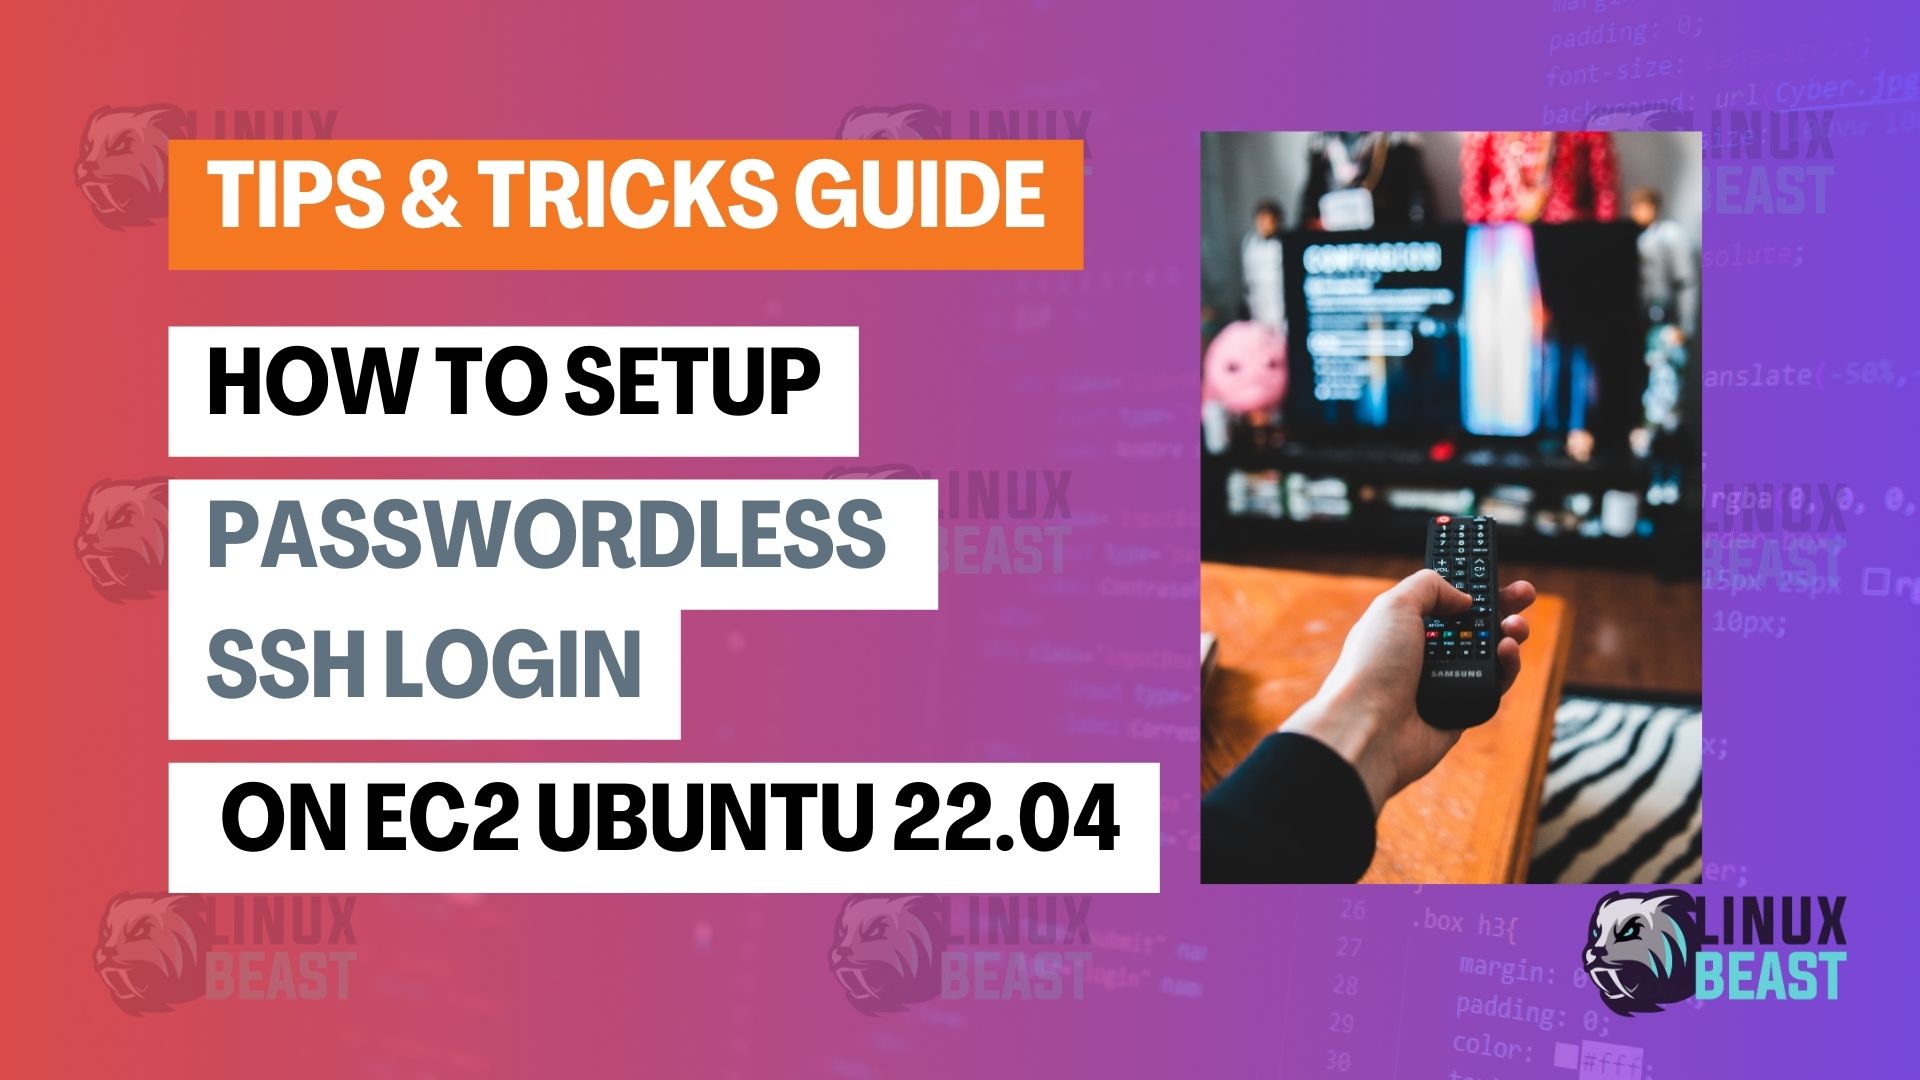 How to Setup Passwordless SSH Login on EC2 Ubuntu 22.04